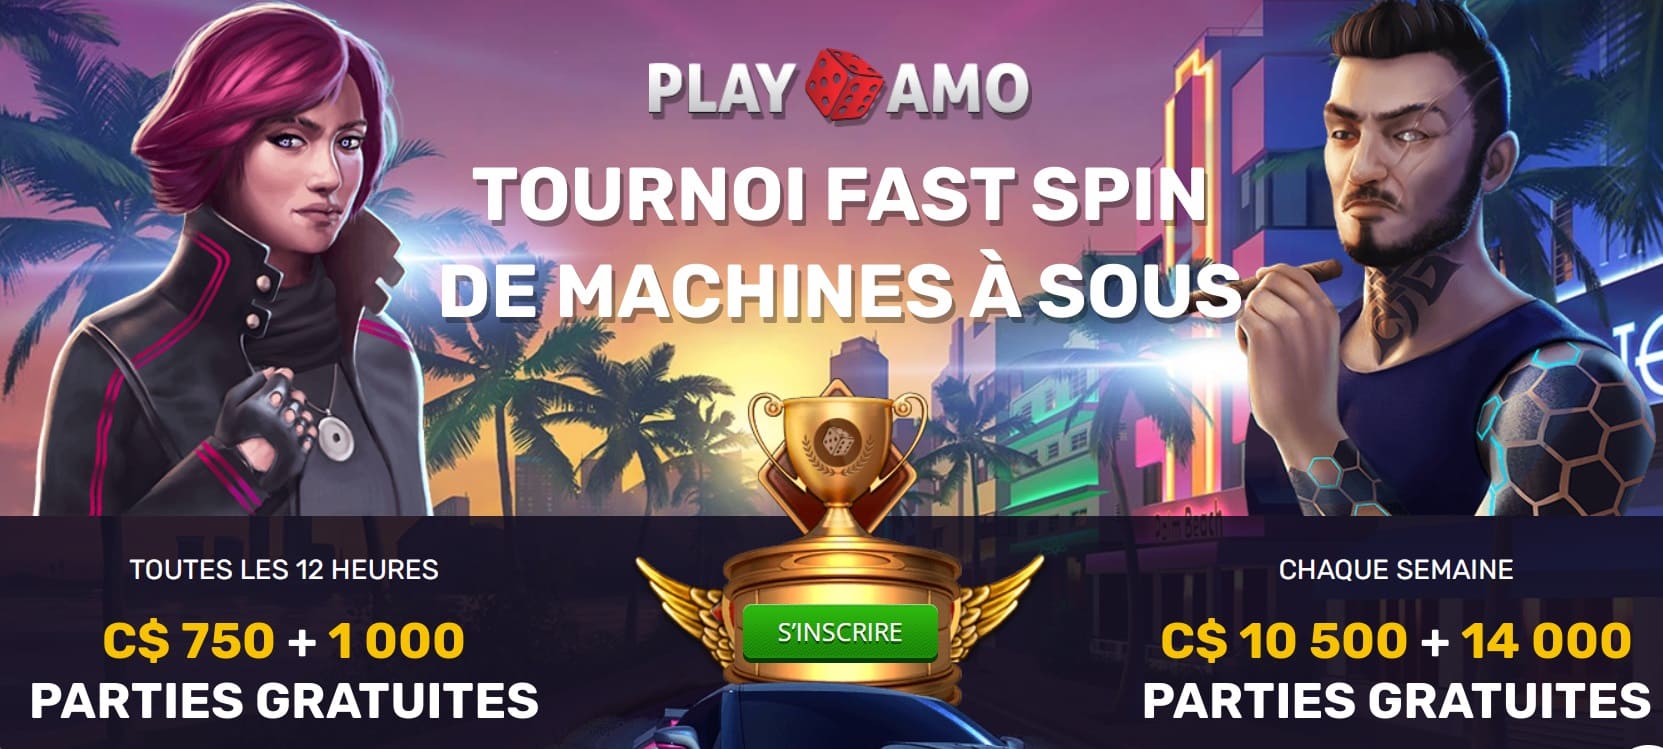 PlayAmoCasino Tournoi Fast Spin